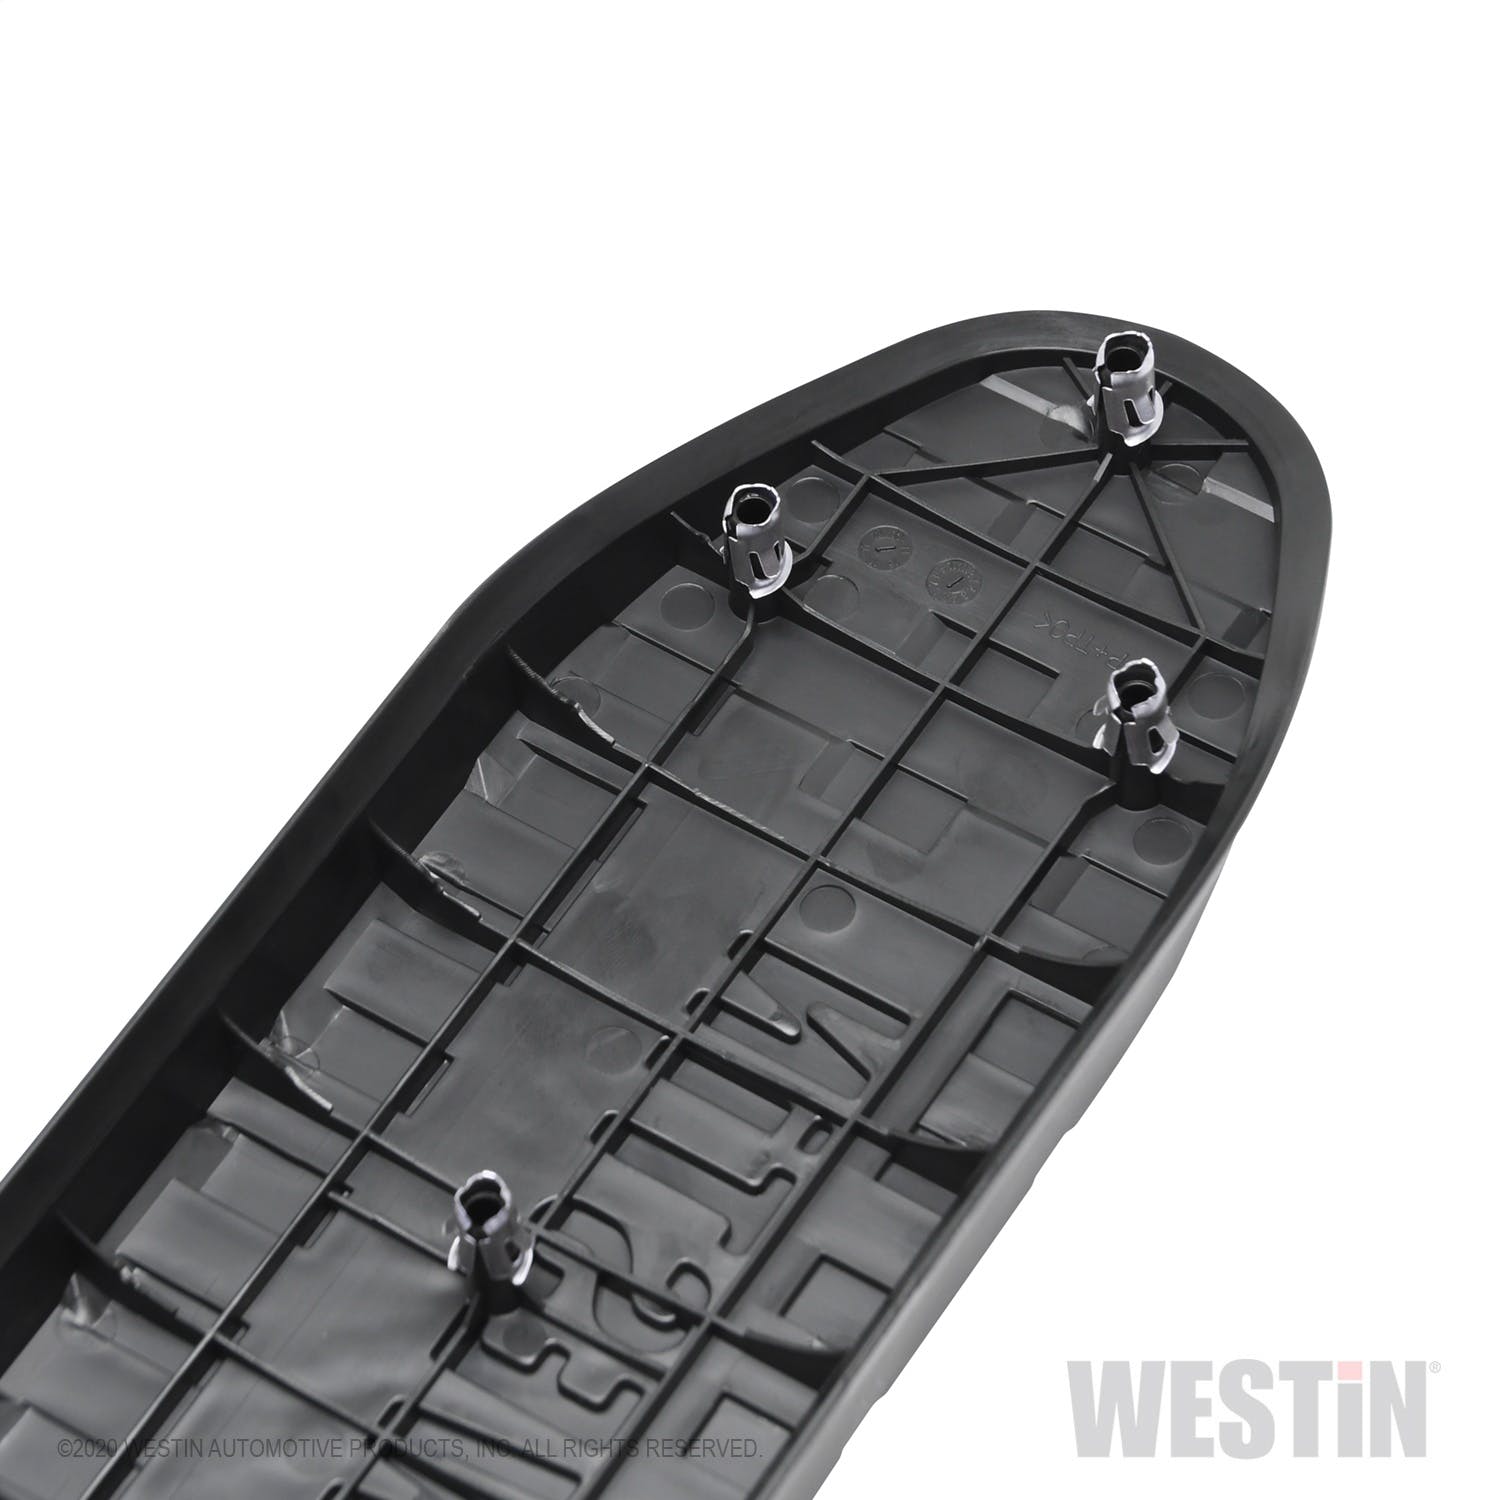 Westin Automotive 21-50002 Pro Traxx 5 Step Pad and Clips Black